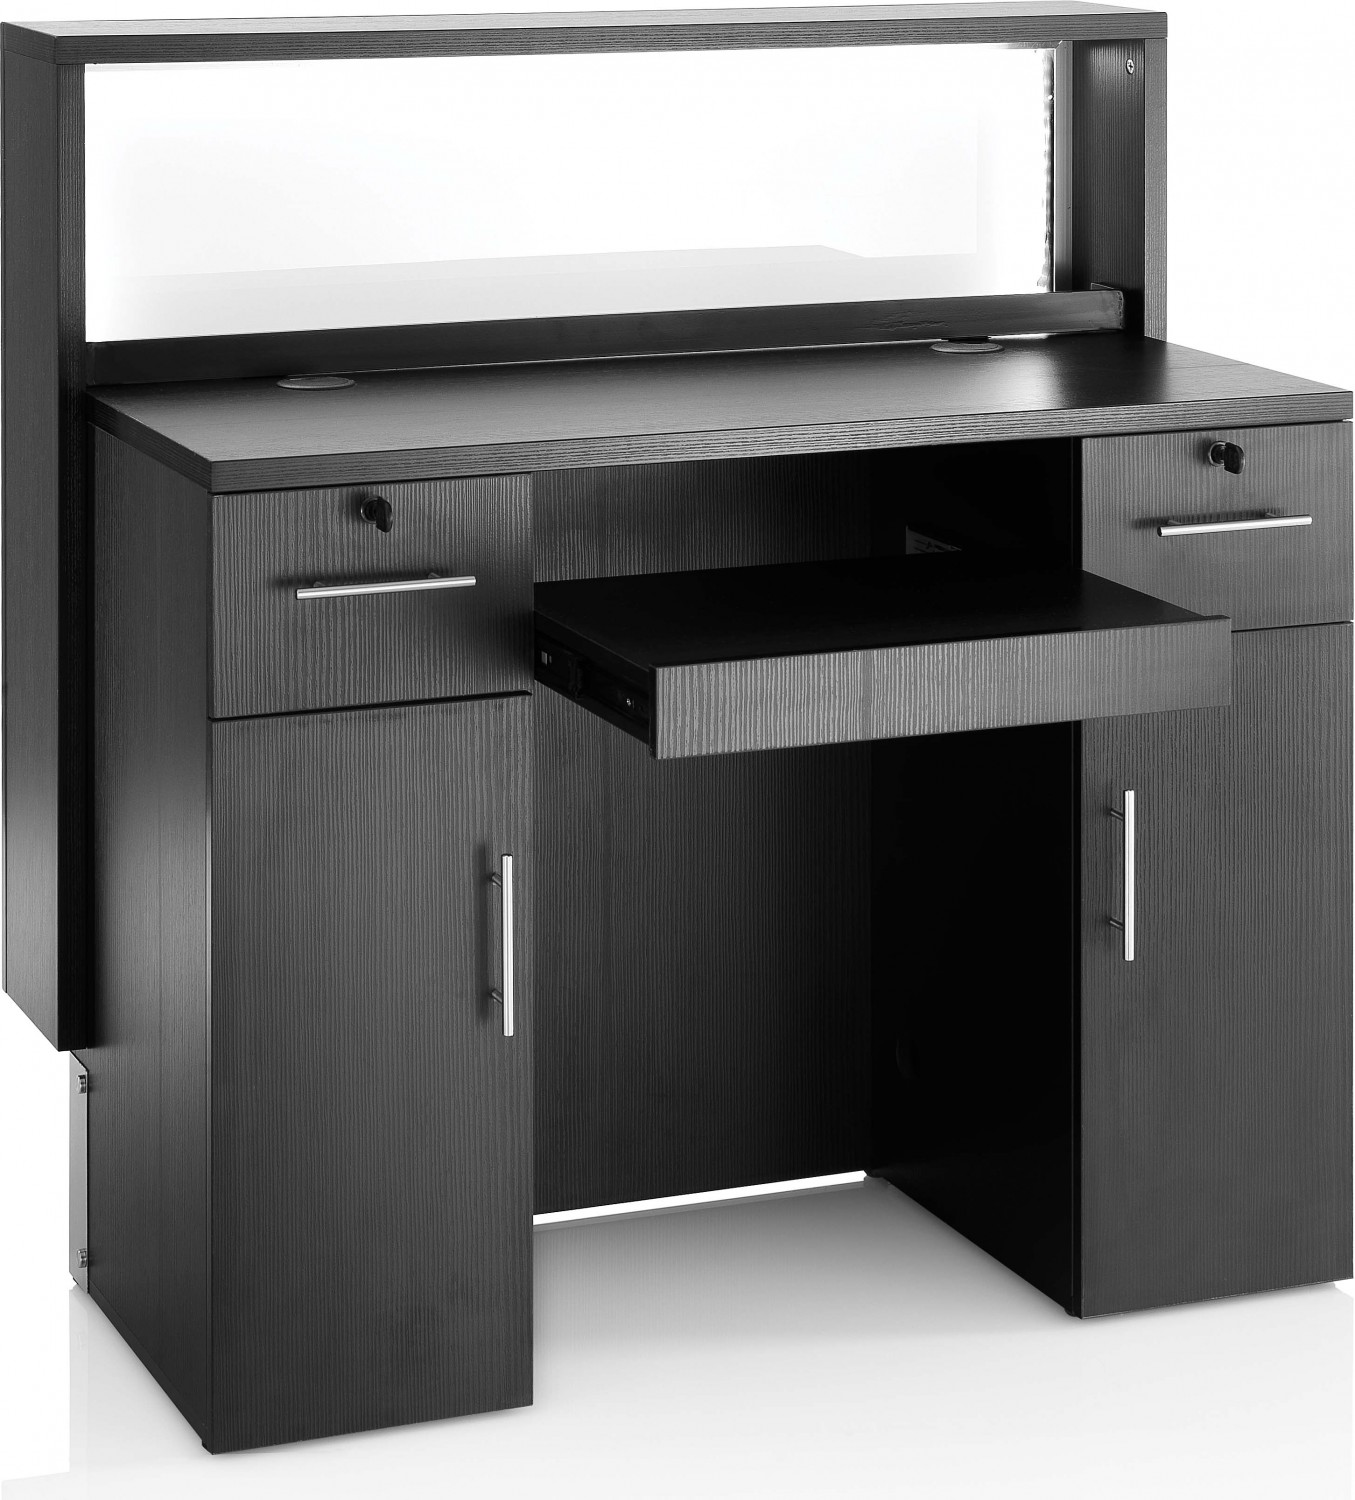  XanitaliaPro Barlux consolle reception desk 